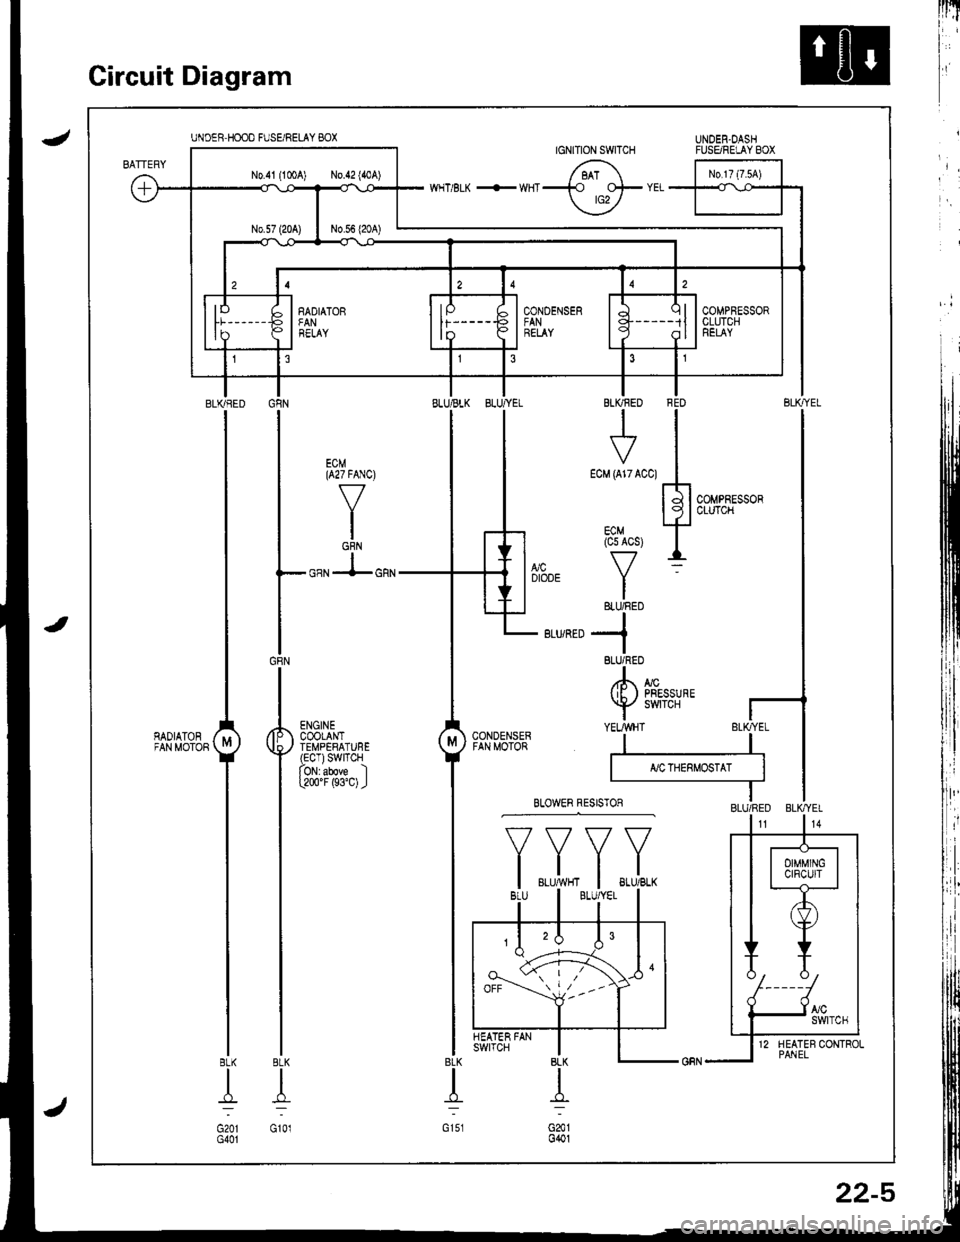 HONDA INTEGRA 1998 4.G Workshop Manual Circuit Diagram
CONDENSERFANRELAY
!
BTKFED FEO
II
VIecu1xzrccl IT(l
tql
i.tli*, Tf7 r-
IBIU/RED
I-1
8LU/REO
.*.. *(if ) PRESSUFE
Y SWTCH
YEL/N4]T
lvcDIODE
- BLUiRED
I ,,,,^,-.,
IY
r.--"-G8N
I,**,
Y